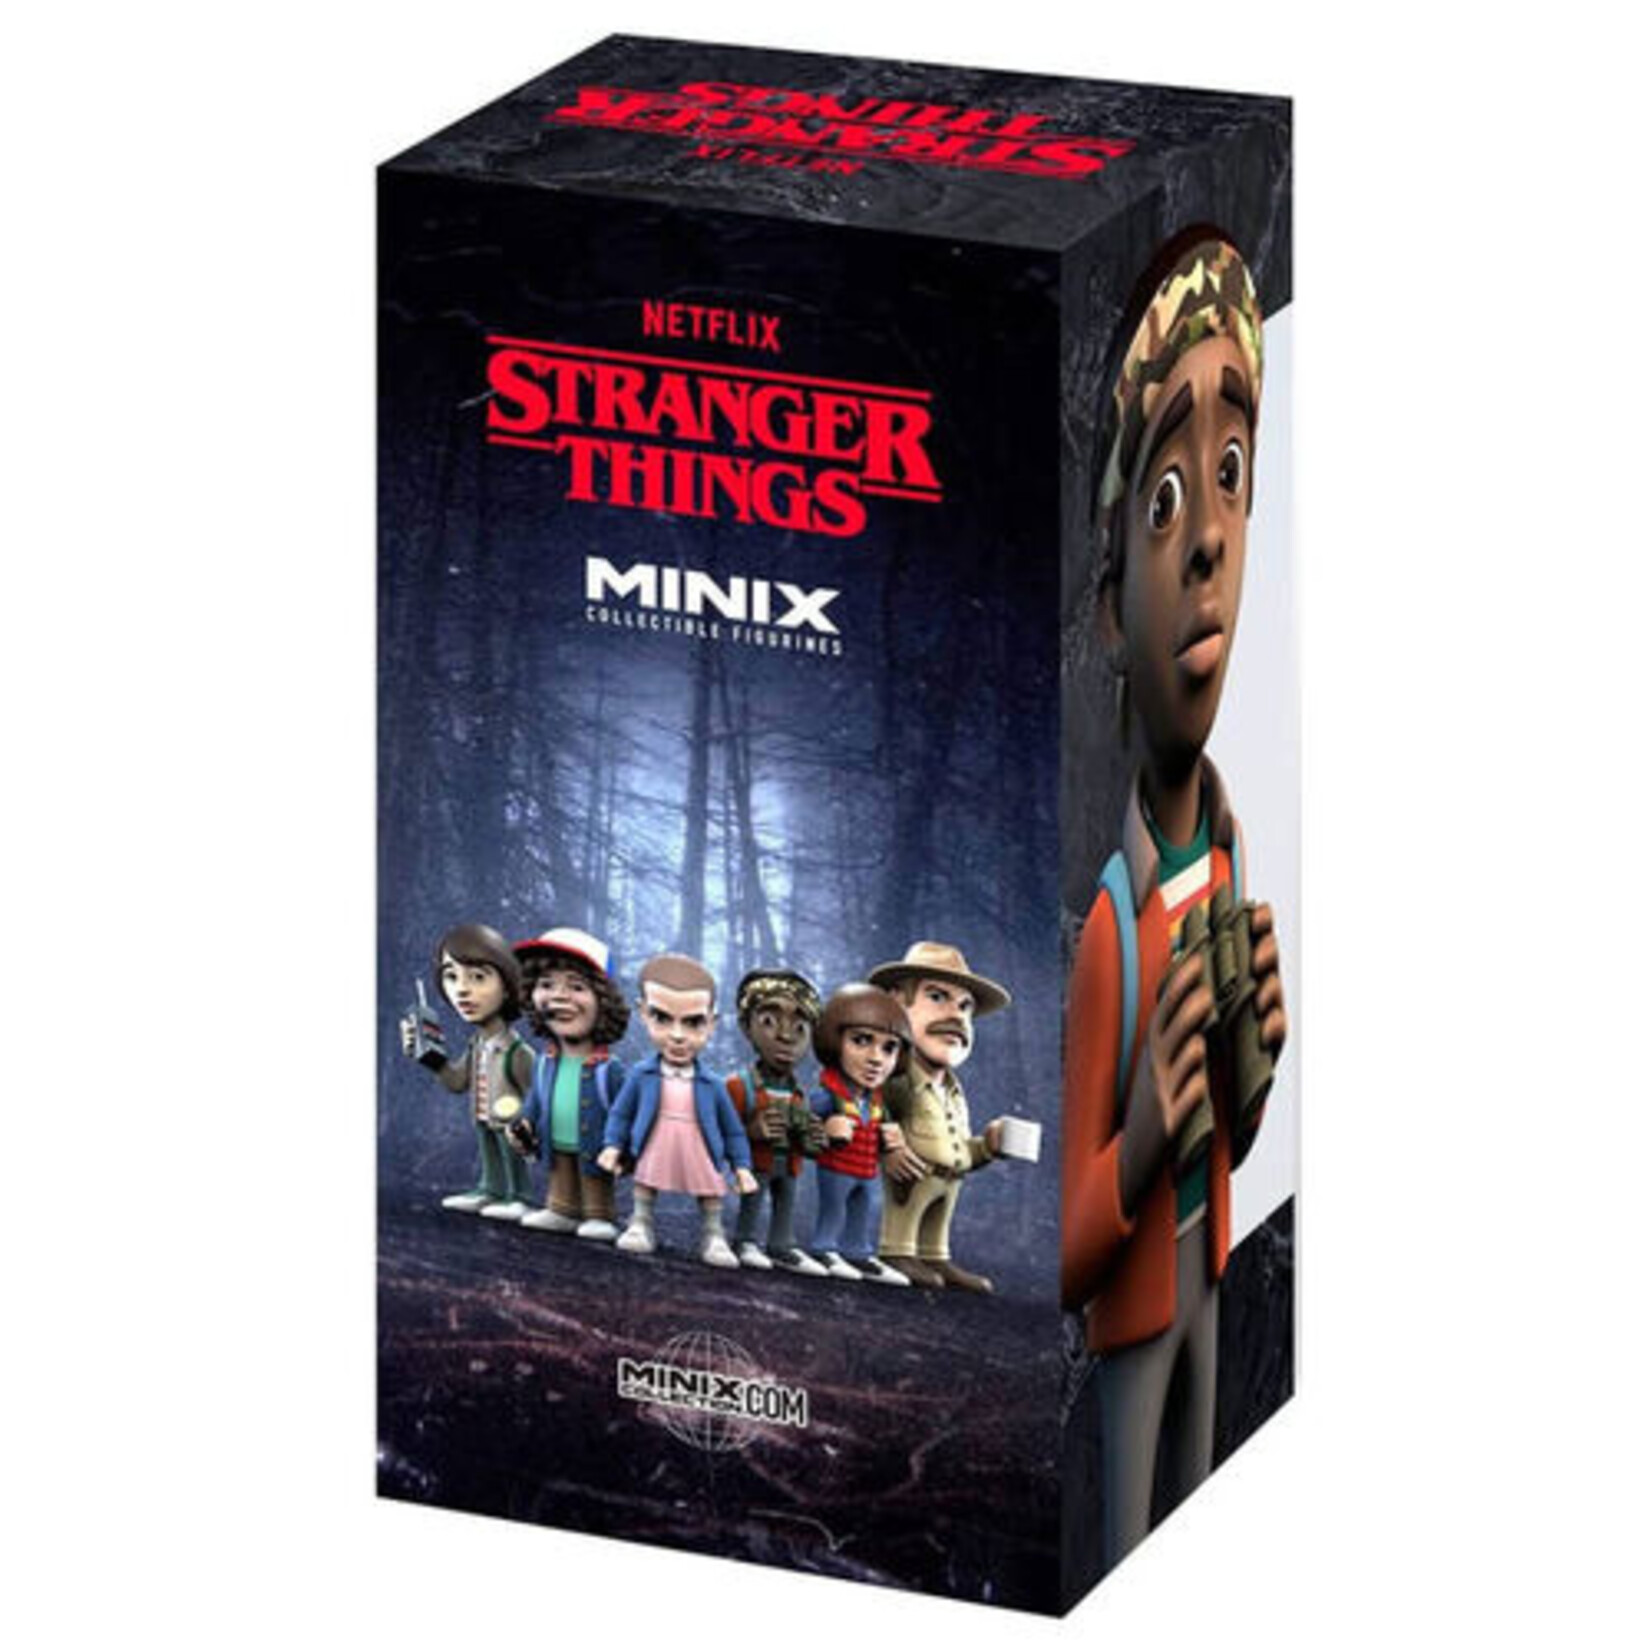 Minix Minix Stranger Things Collectible Figurine Lucas 12 cm